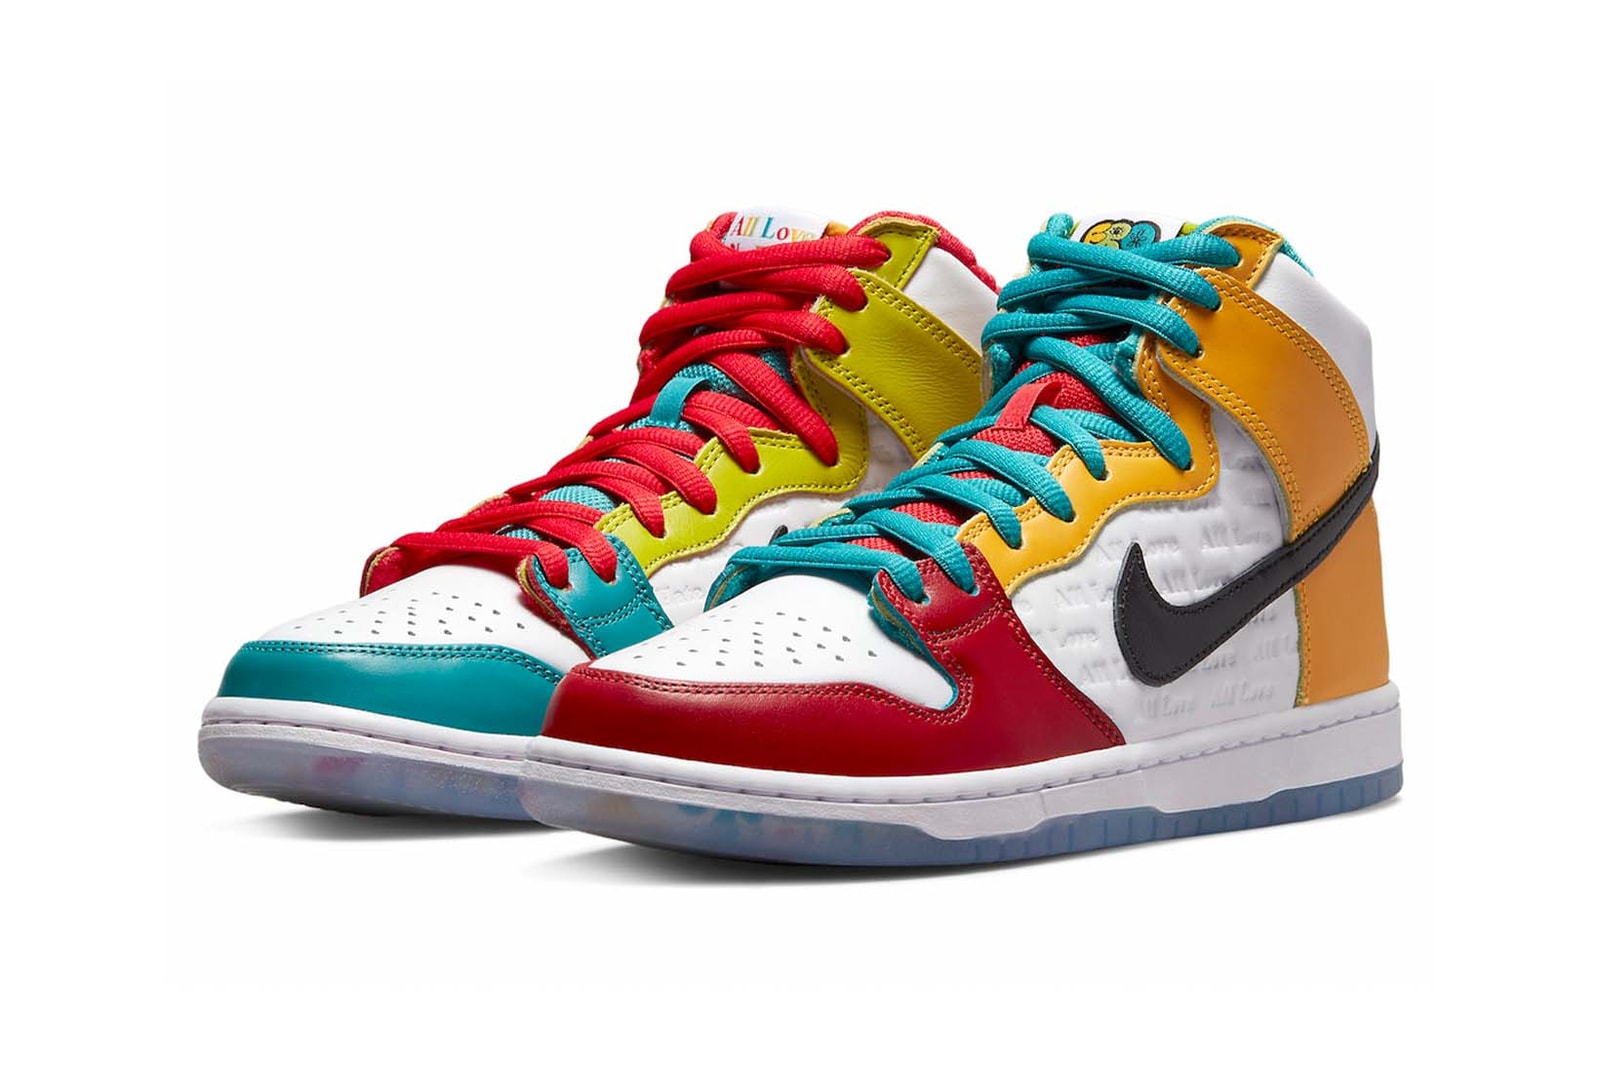 Sneaker Release Calendar Nike Air Jordan adidas Converse